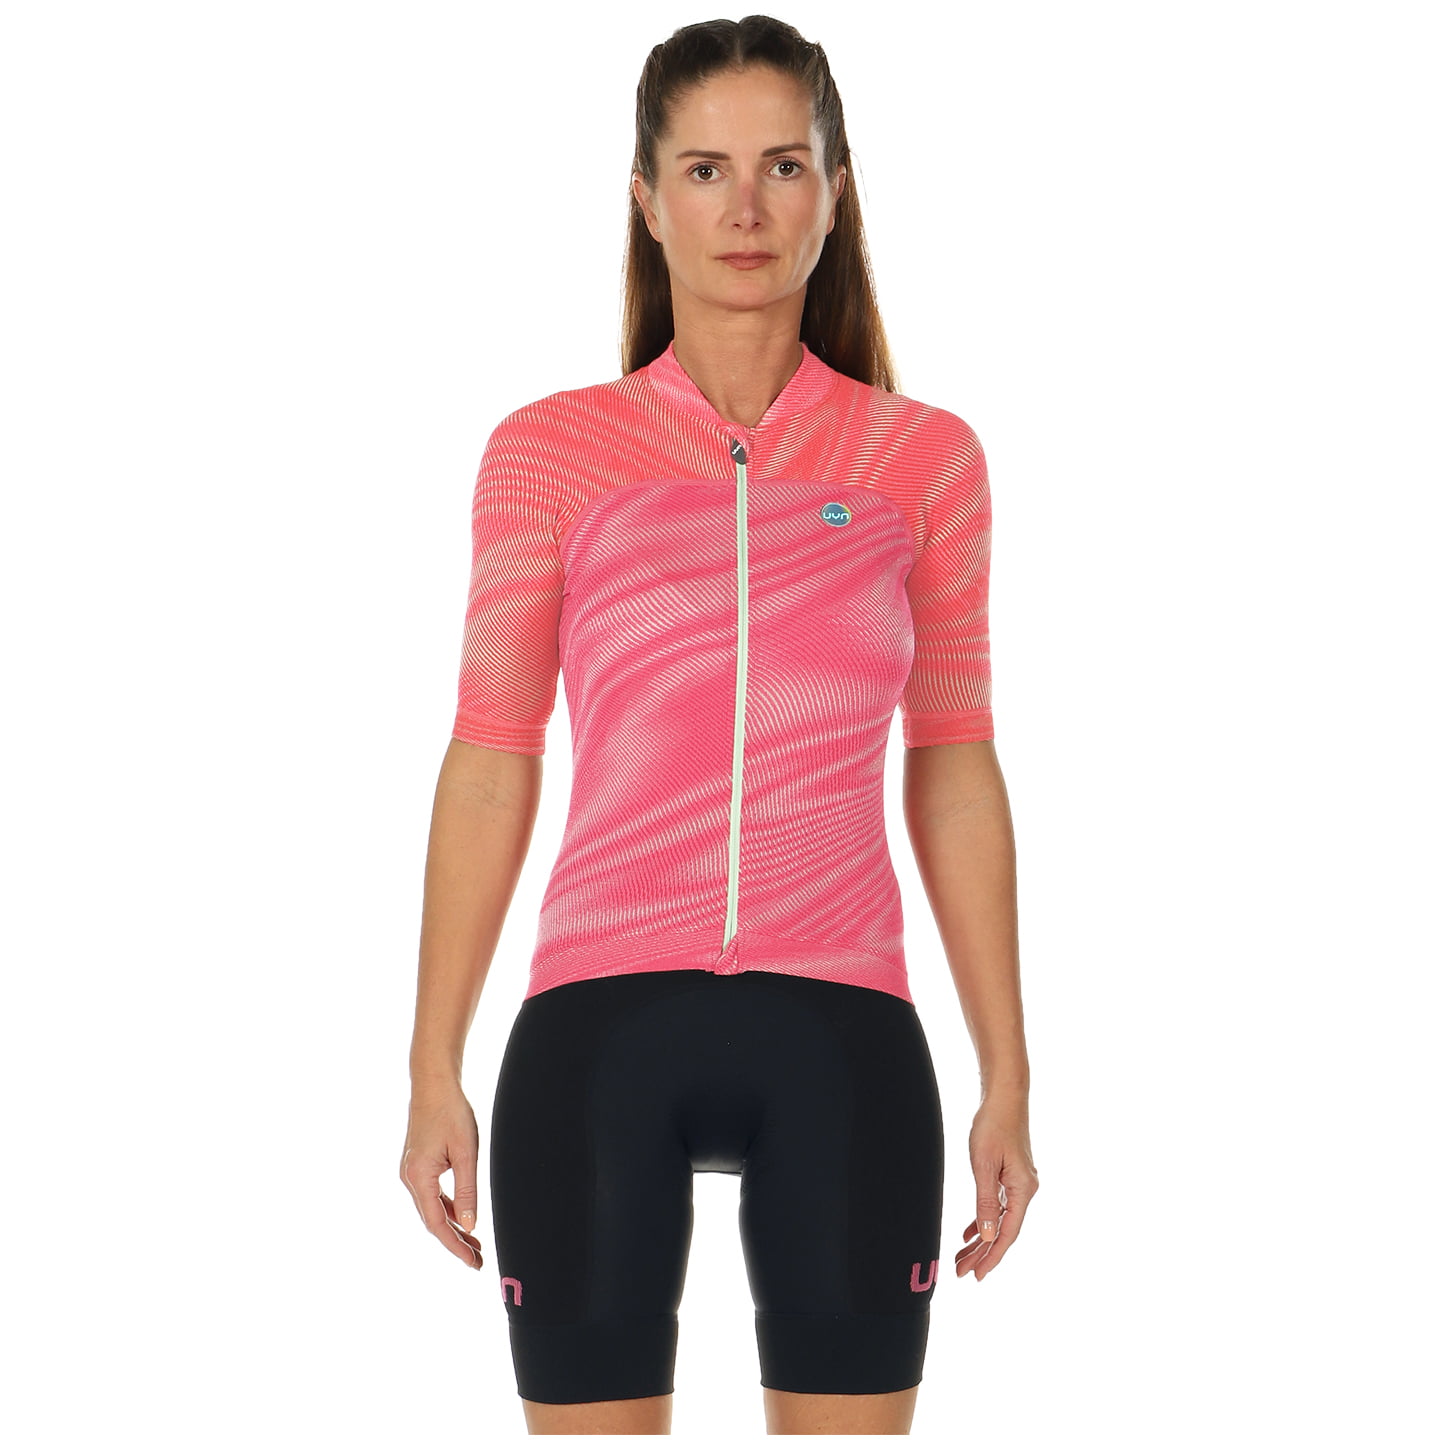 UYN Wave Women’s Set (cycling jersey + cycling shorts) Set (2 pieces), Cycling clothing